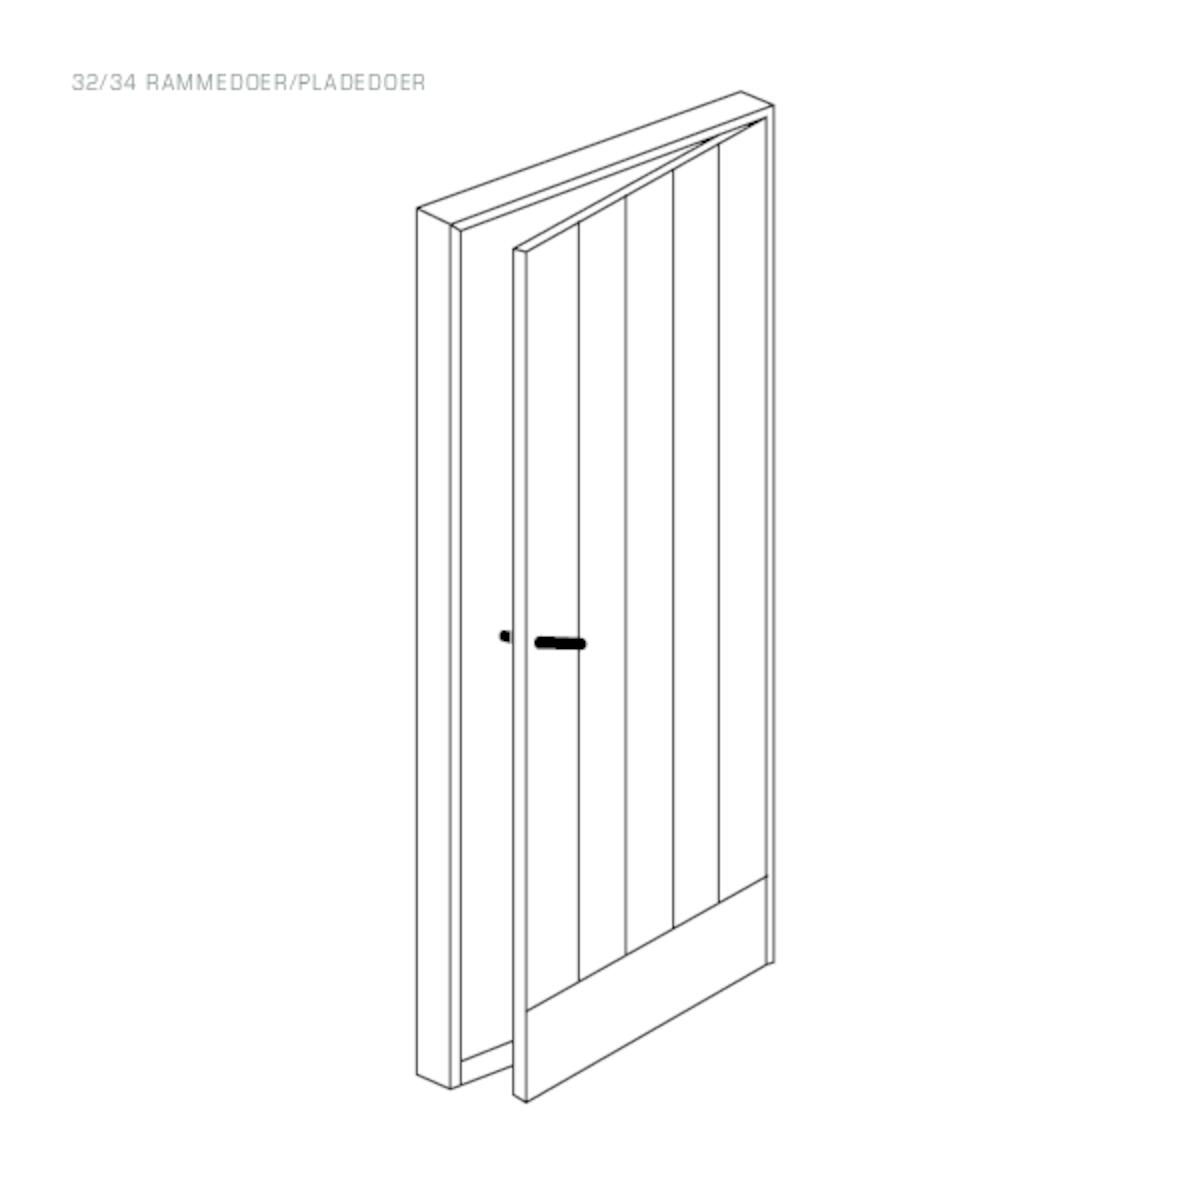 Rationel Panelled Door drawing